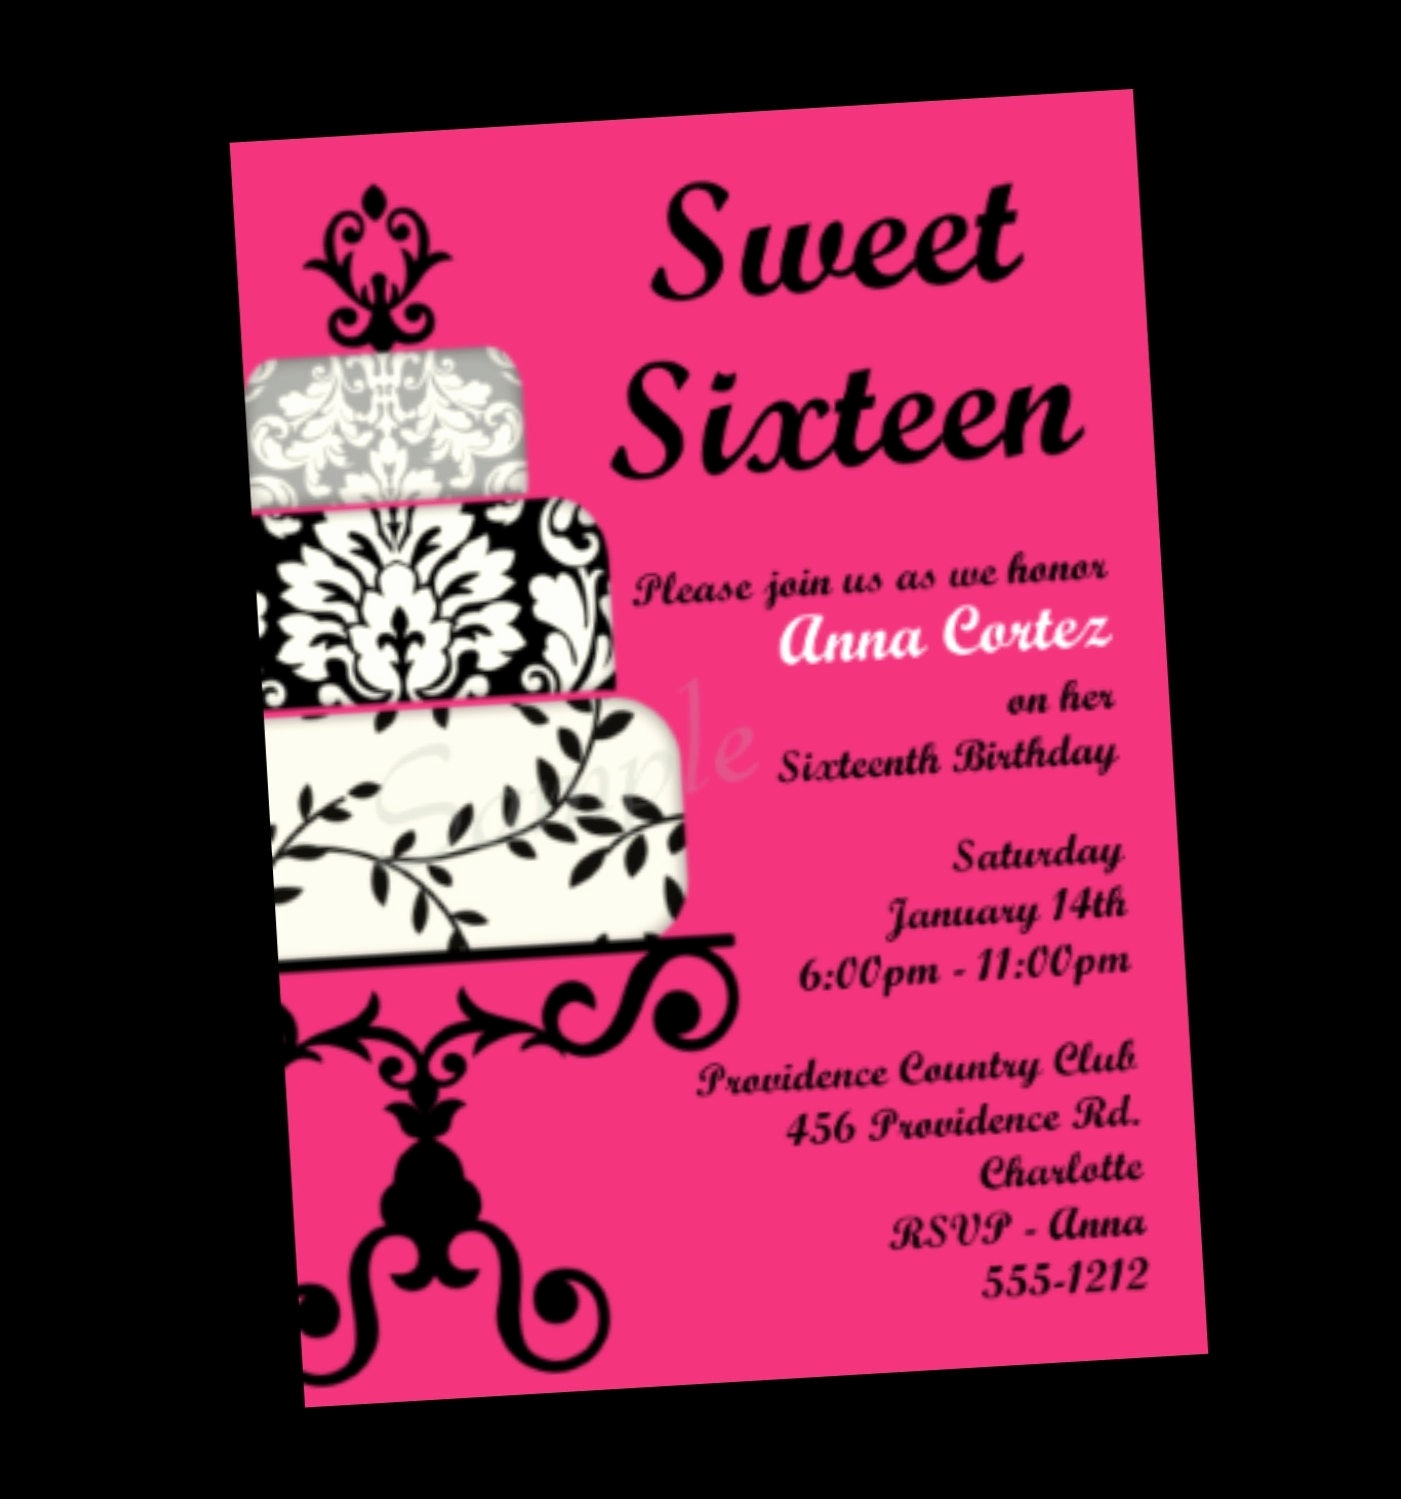 Sweet Sixteen Invitation Wording Awesome Sweet 16 Birthday Invitation Sweet Sixteen Party by